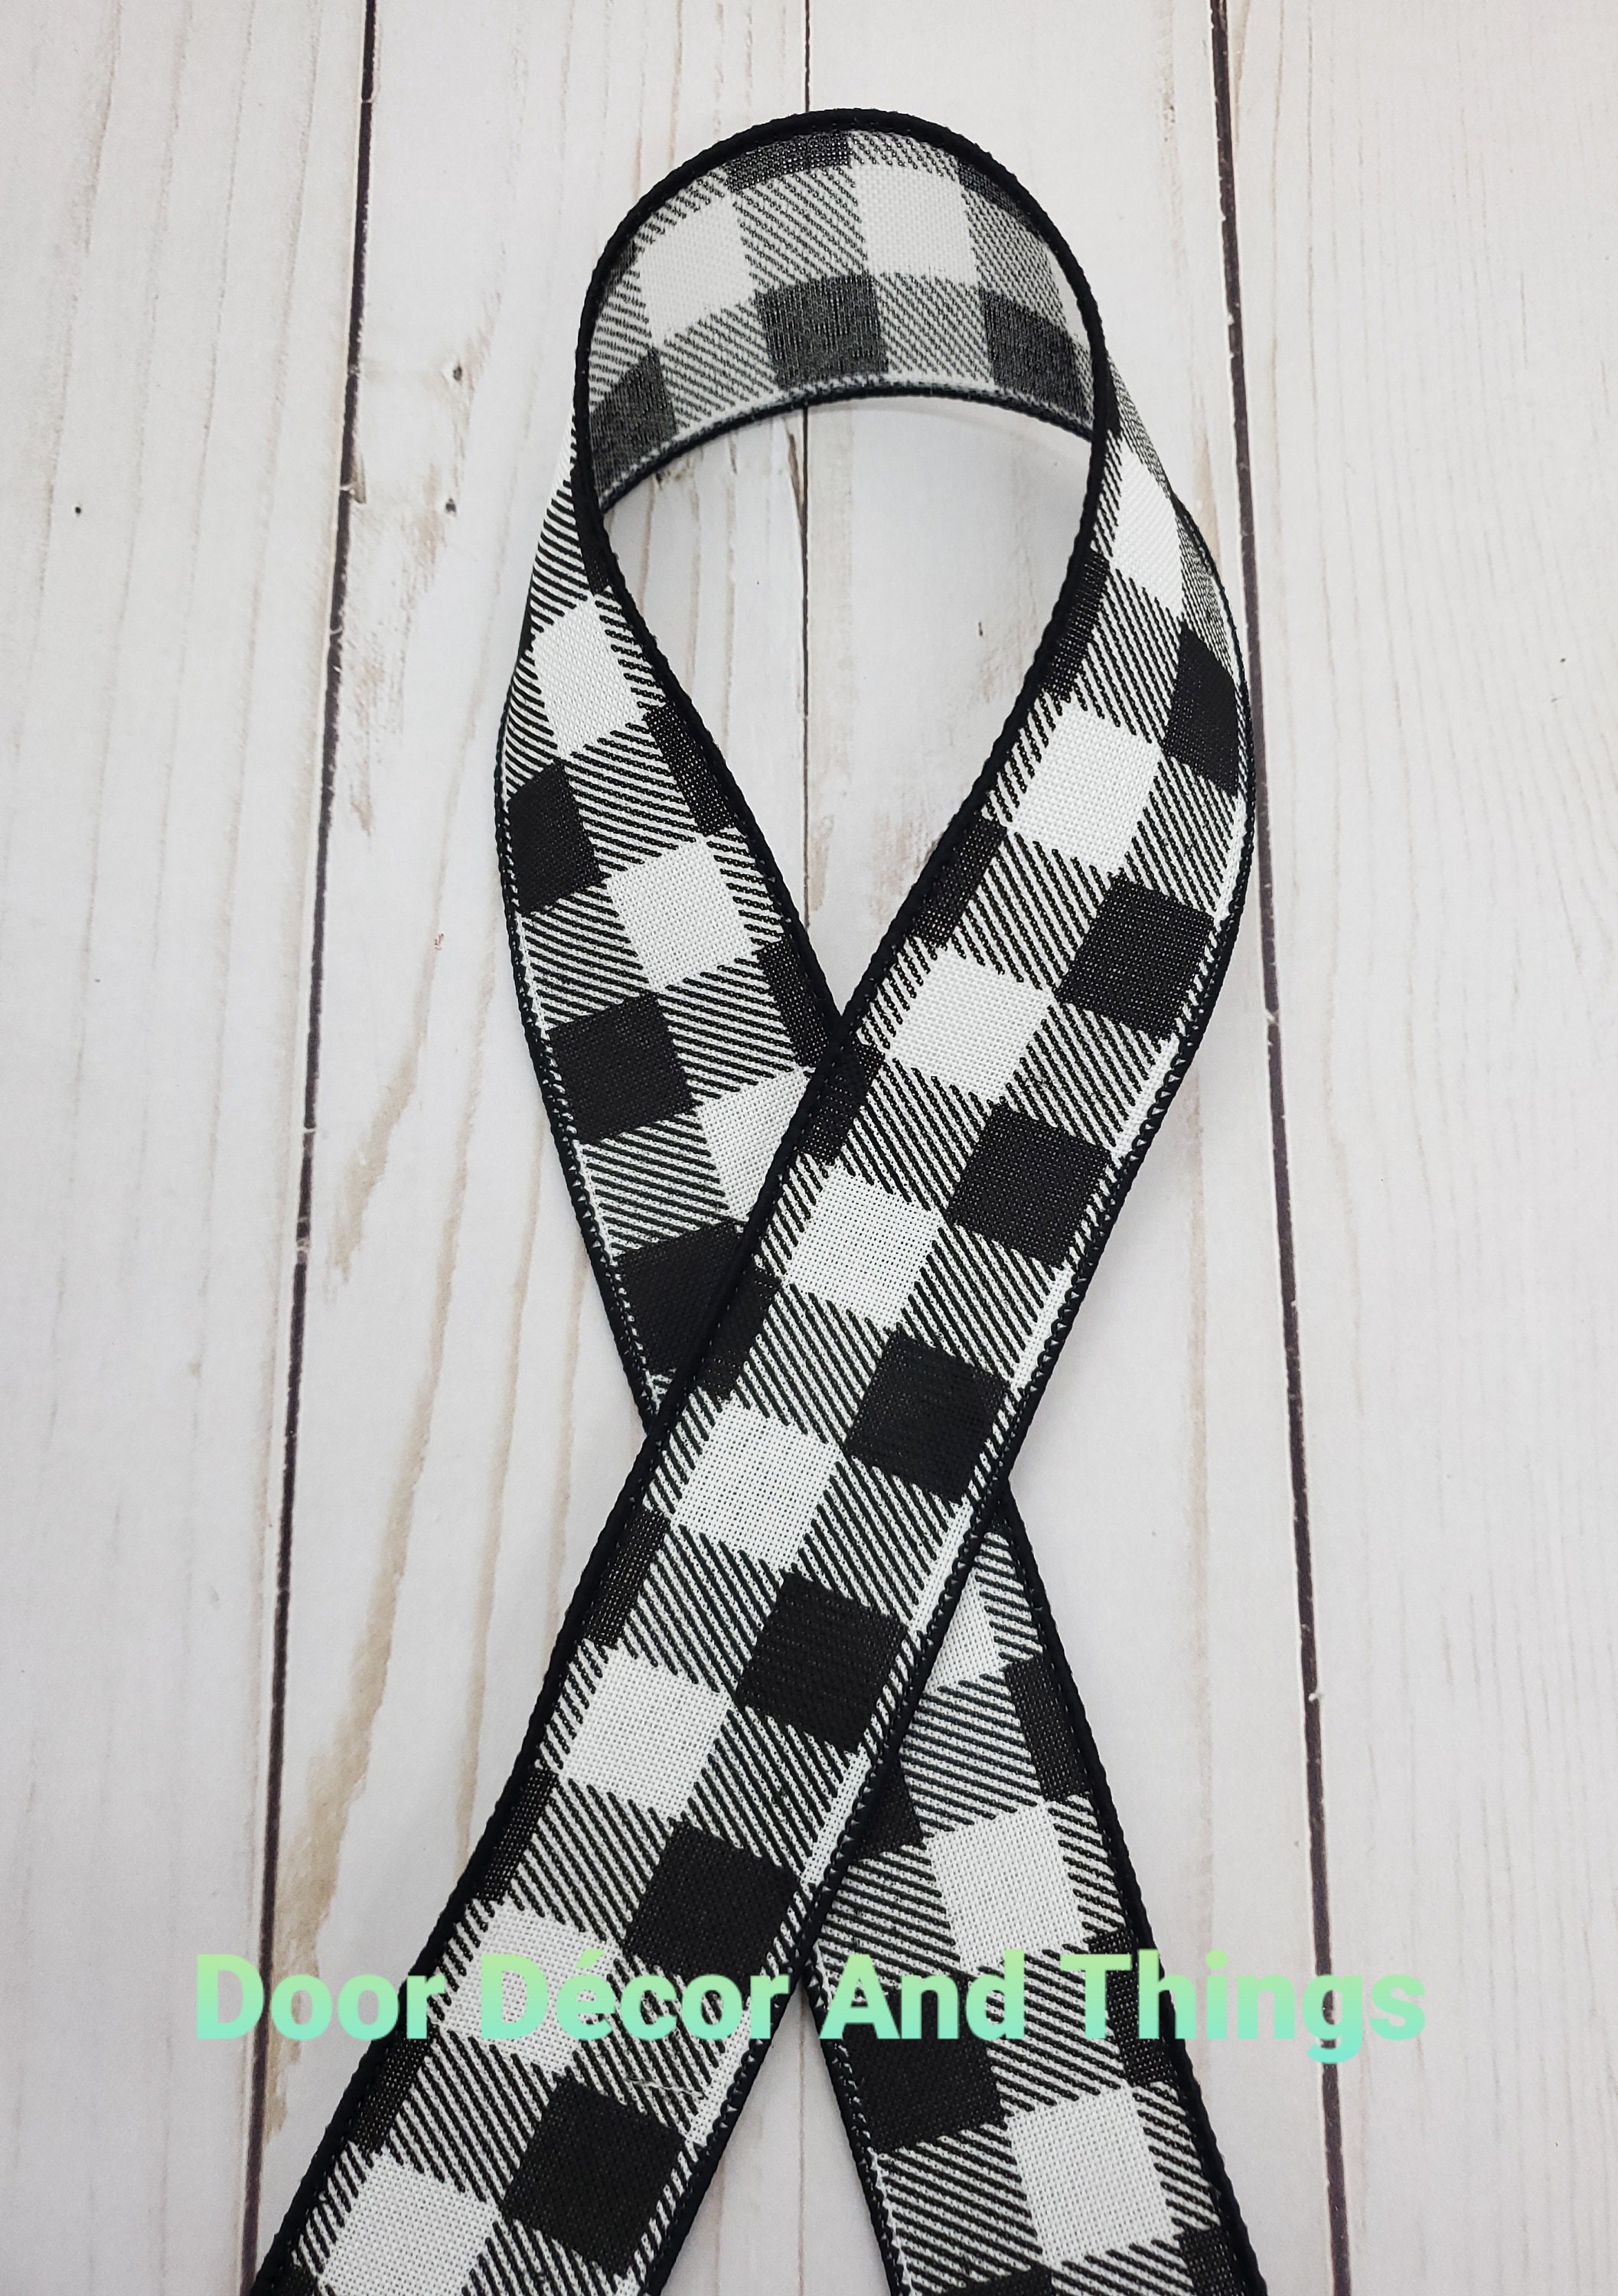 350.1 - 5 YARDS RETAIL - Black & white check gingham ribbon trim 7